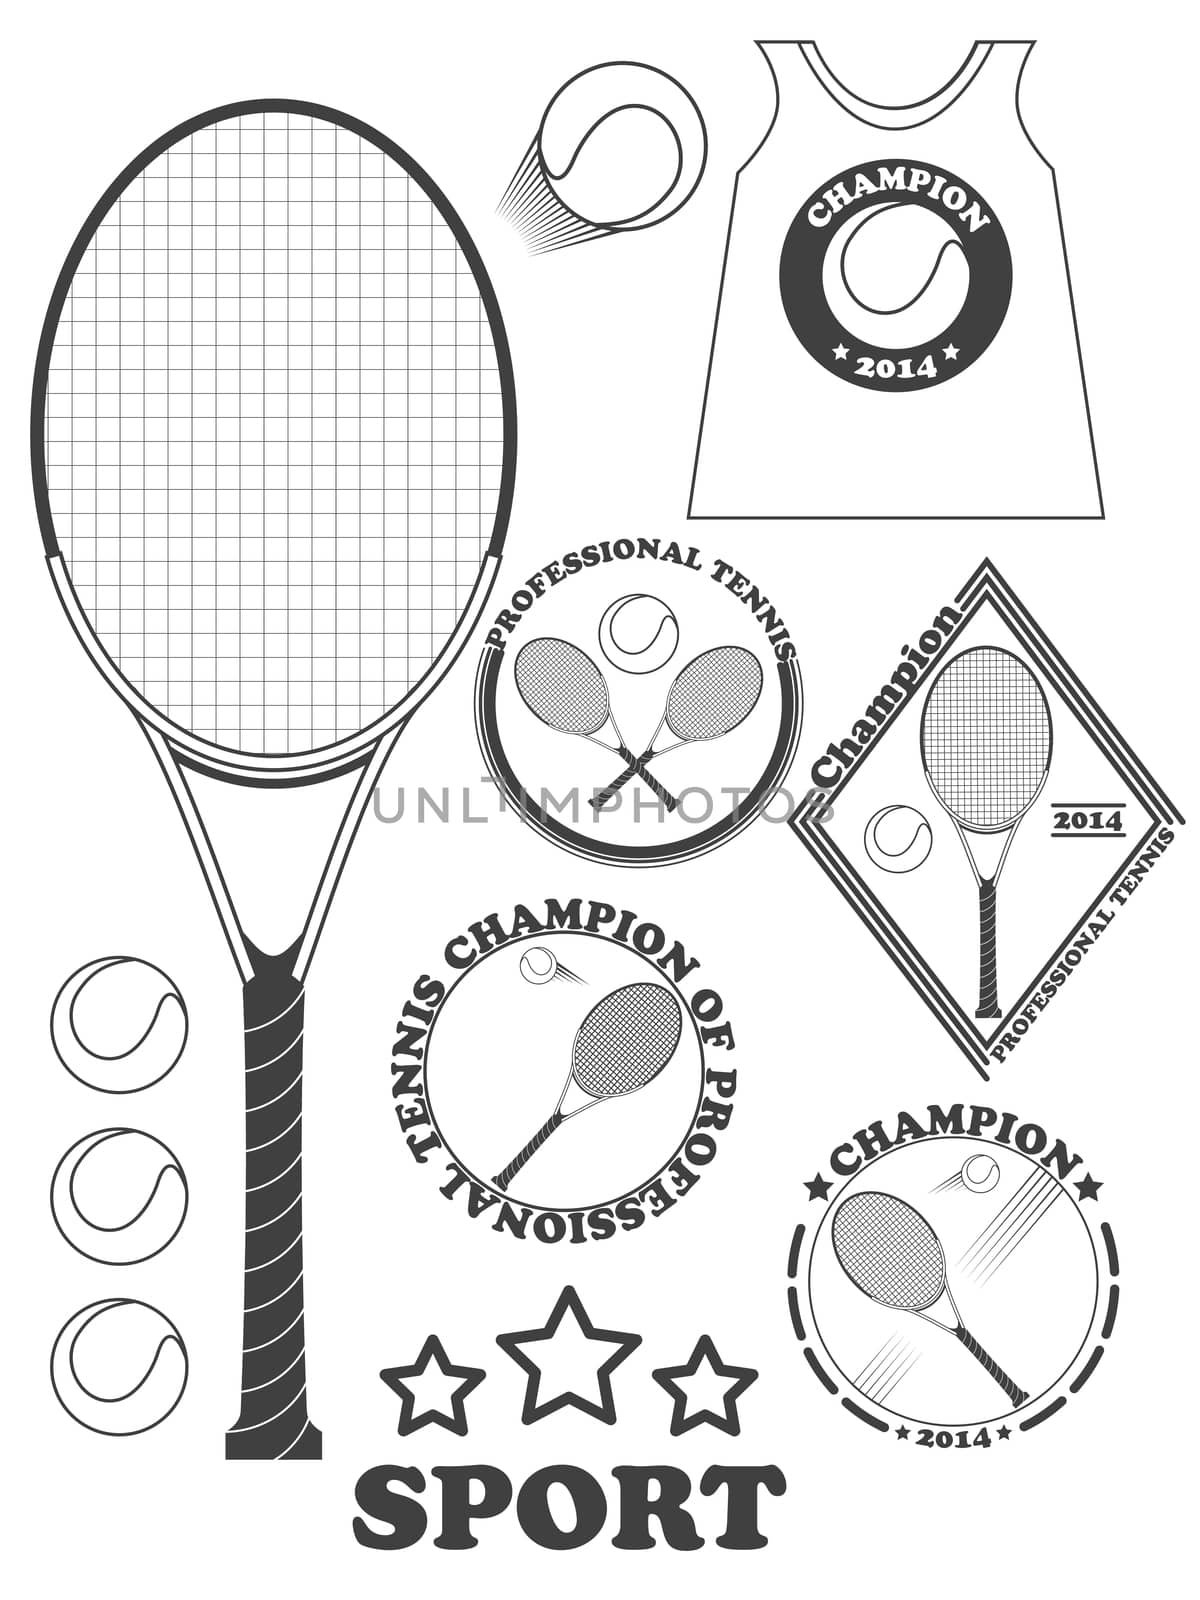 Tennis league labels, emblems and design elements. by Adamchuk